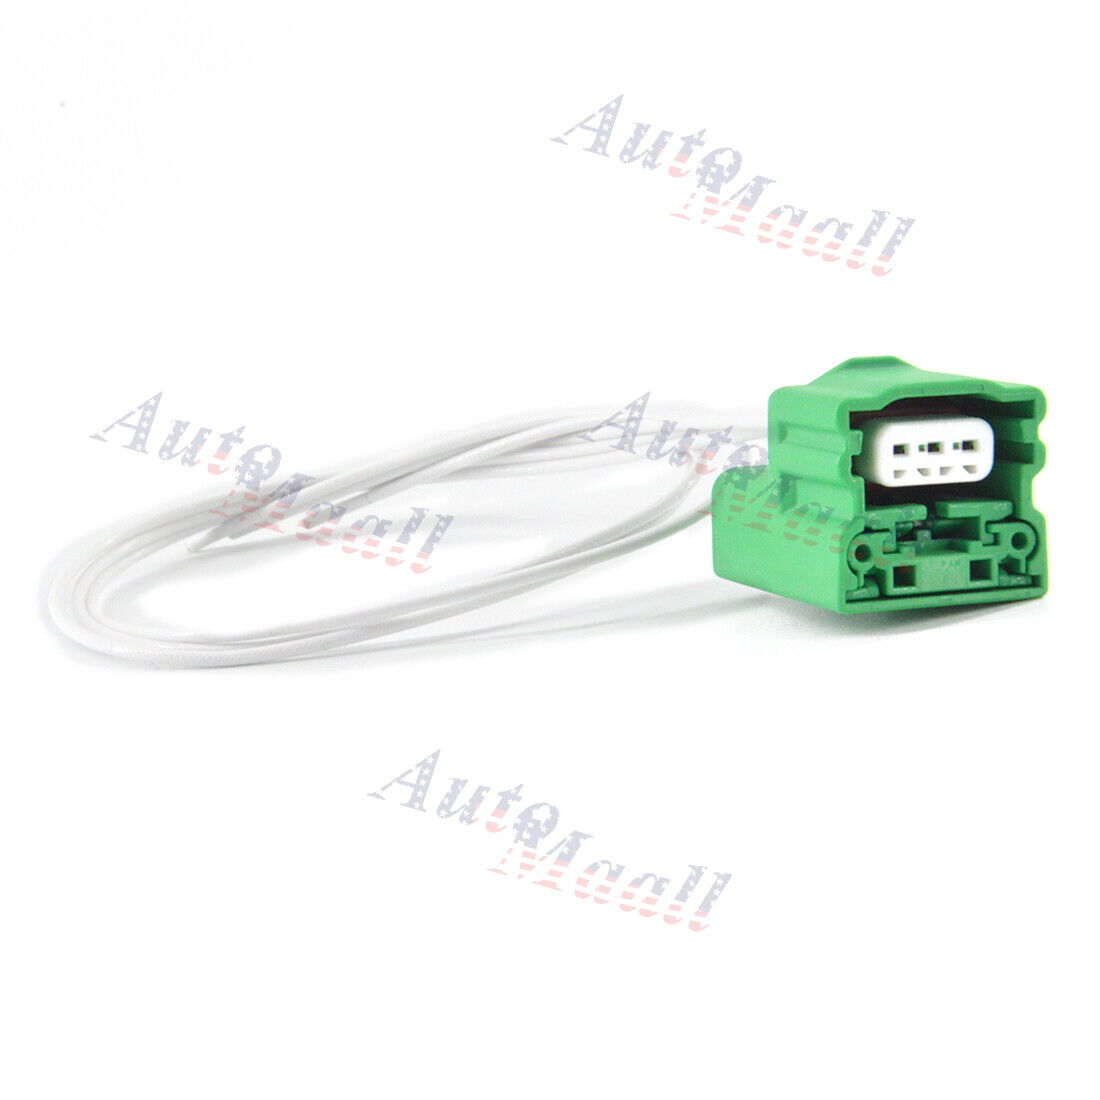 Camshaft Position Sensor Connector Plug For Nissan Sentra Altima Murano Maxima